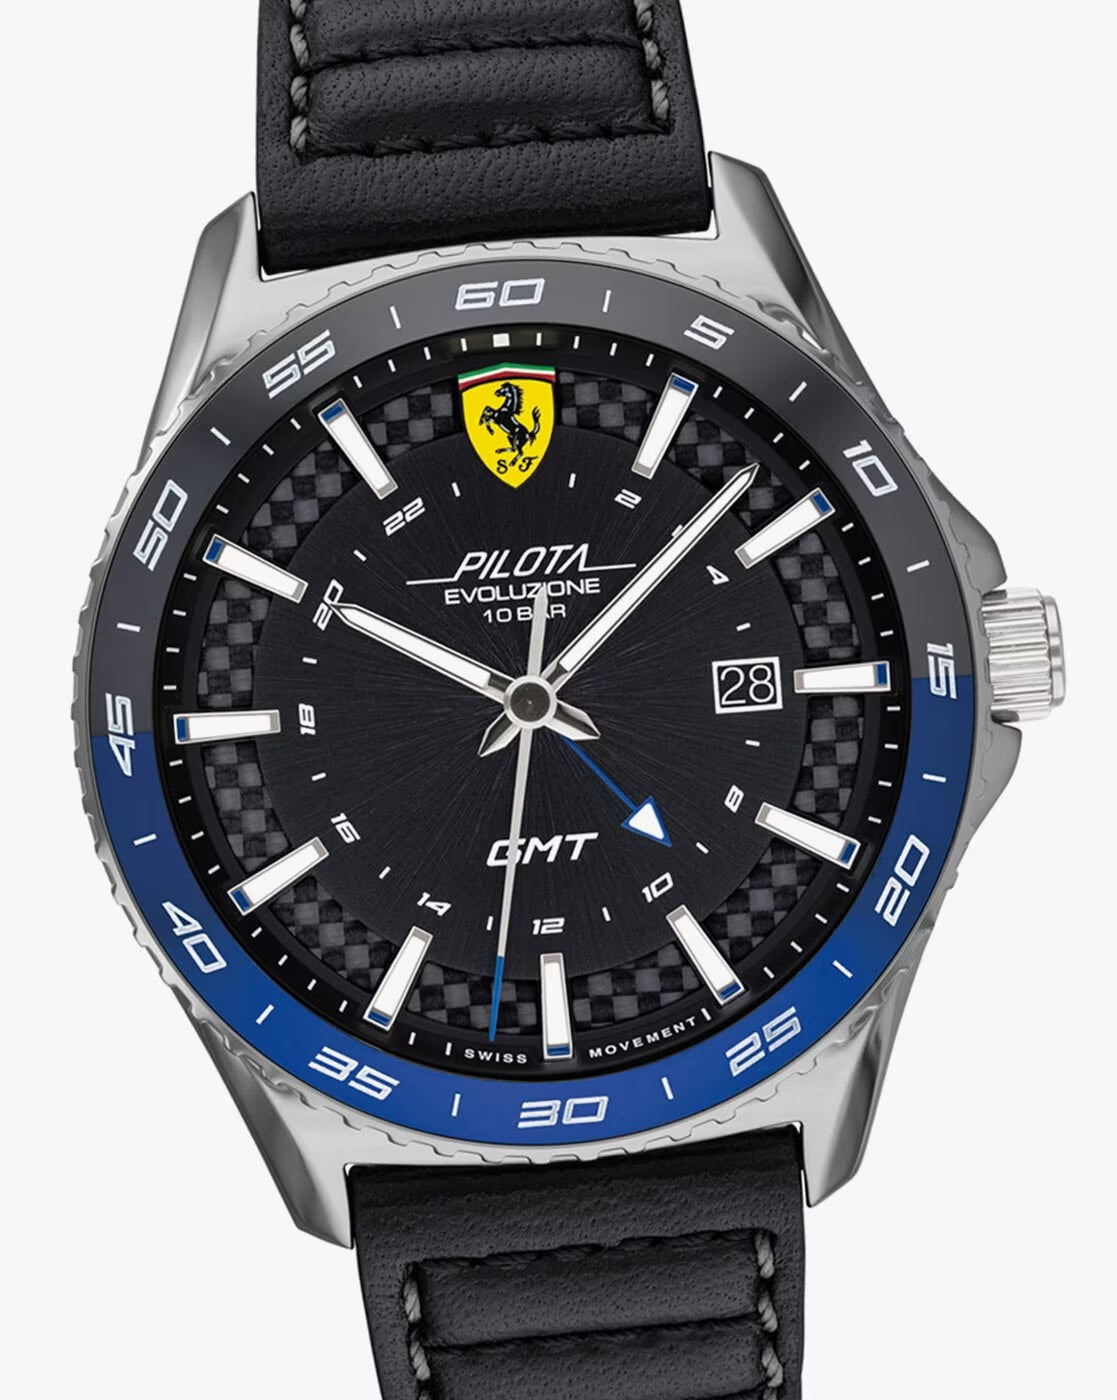 Scuderia Ferrari Pilota Evo Analogue Watch / 45mm / Quartz / 10ATM / Leather